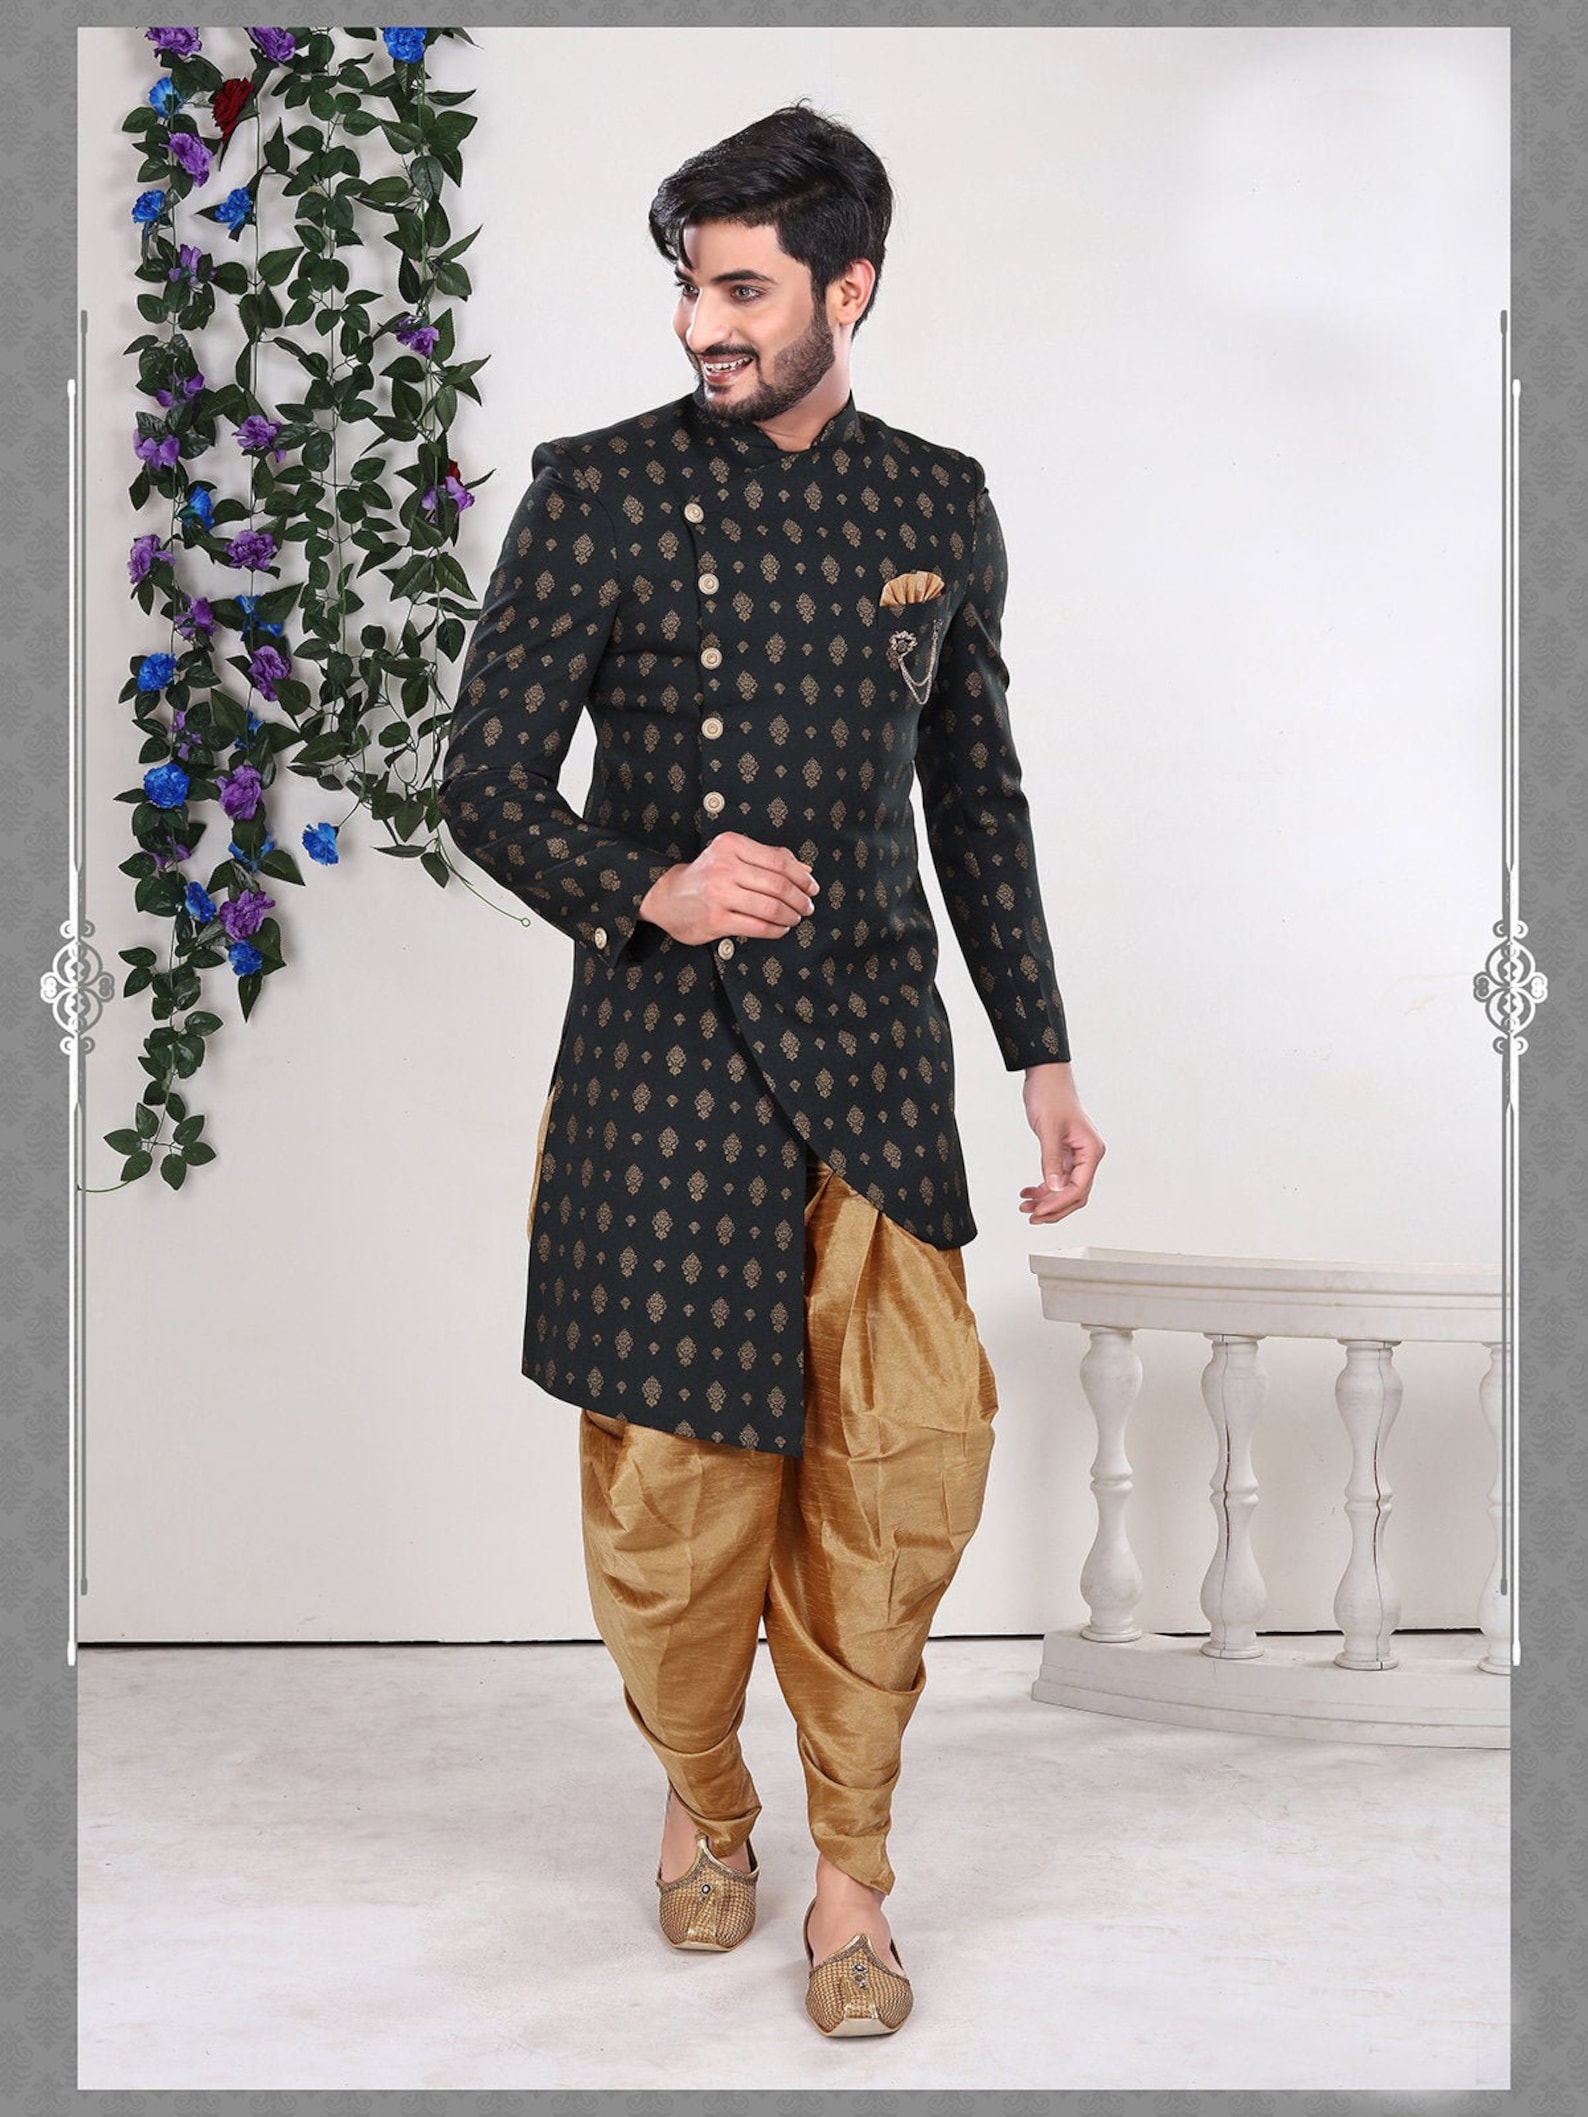 Designer Sherwani Black Indian suit for Mens wedding | Etsy